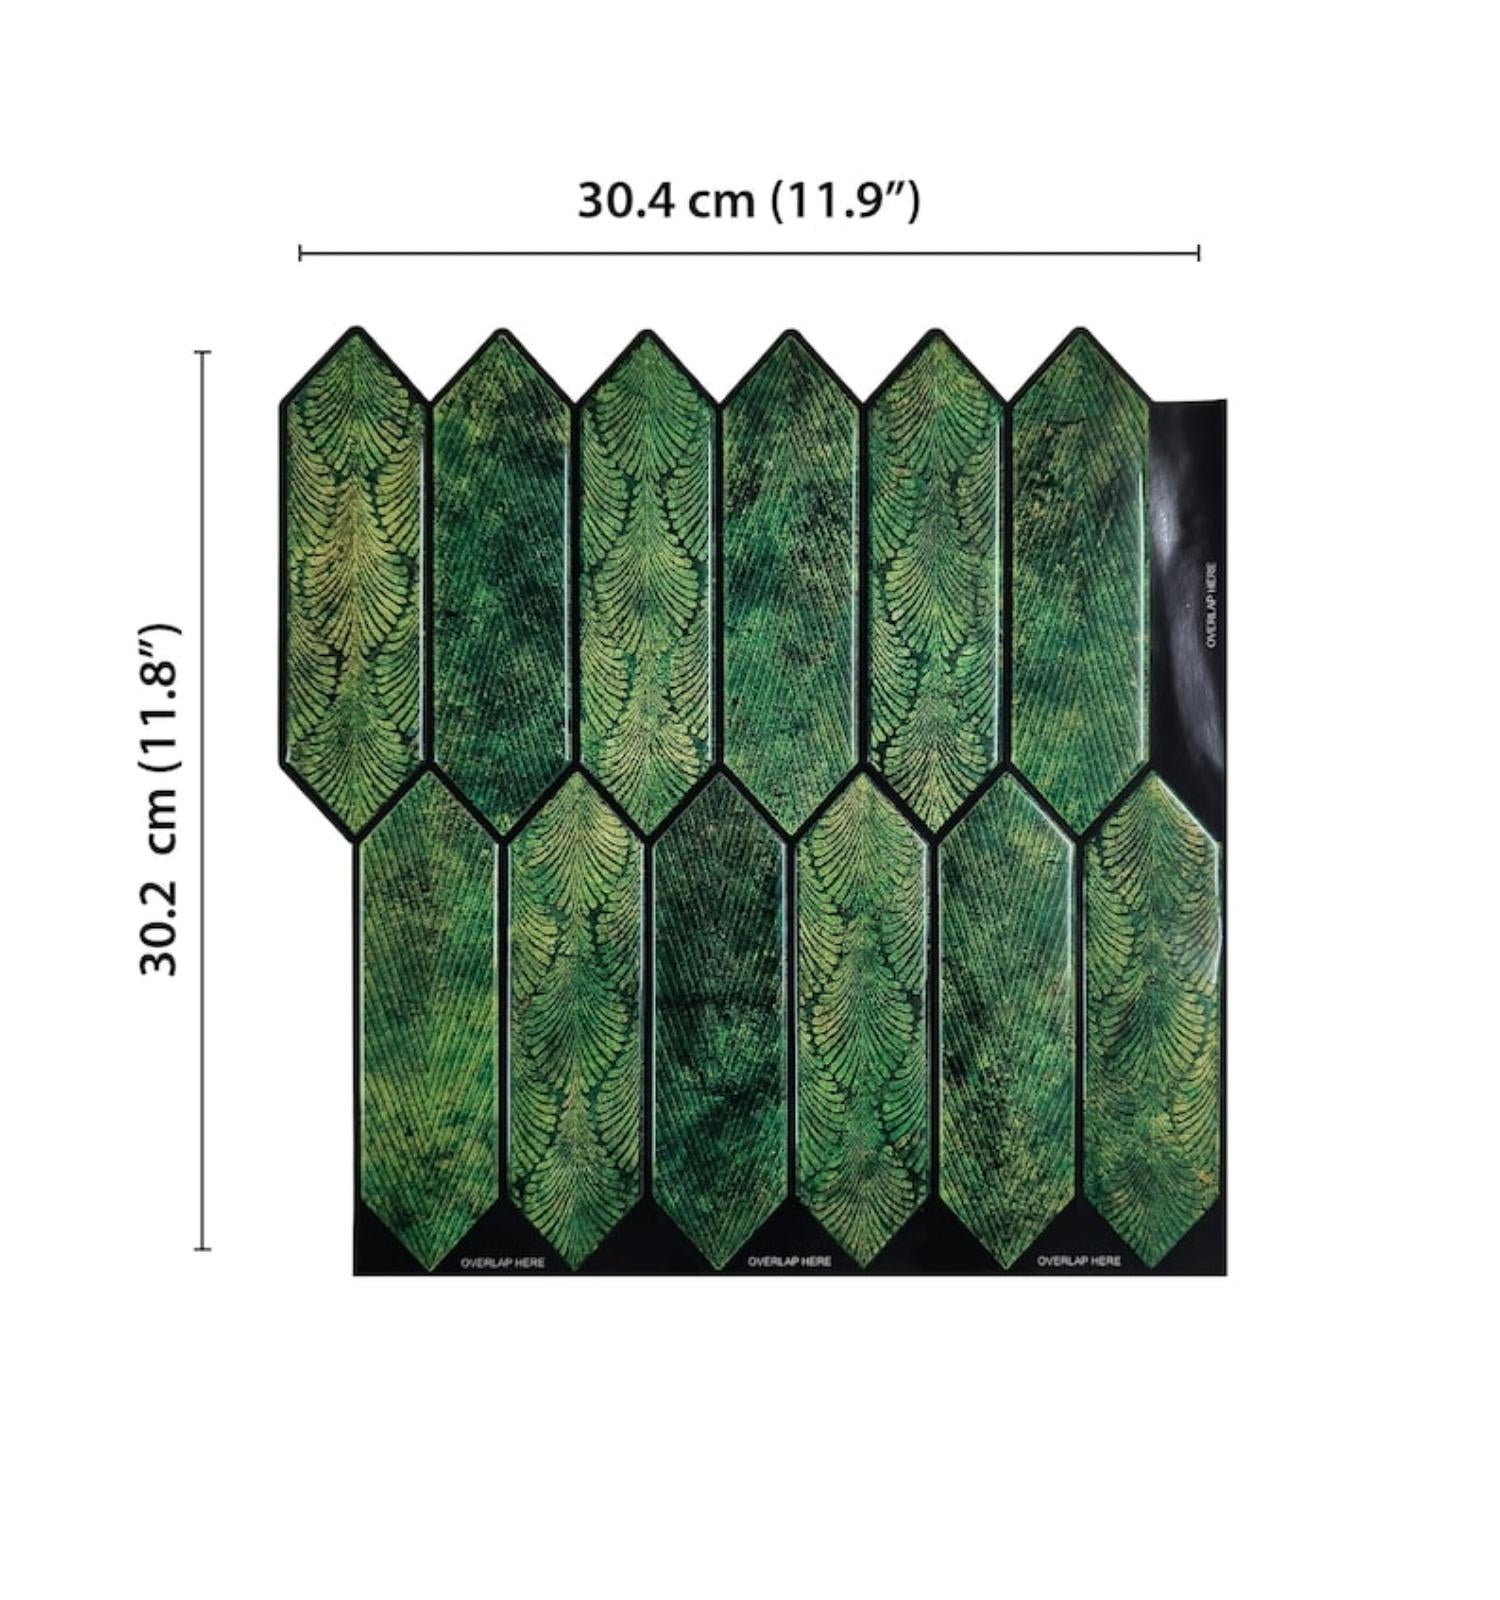 Radiant Green Long Hexagon Peel and Stick Wall Tile | Kitchen Backsplash Tiles | Self Adhesive Tiles For Home Decor